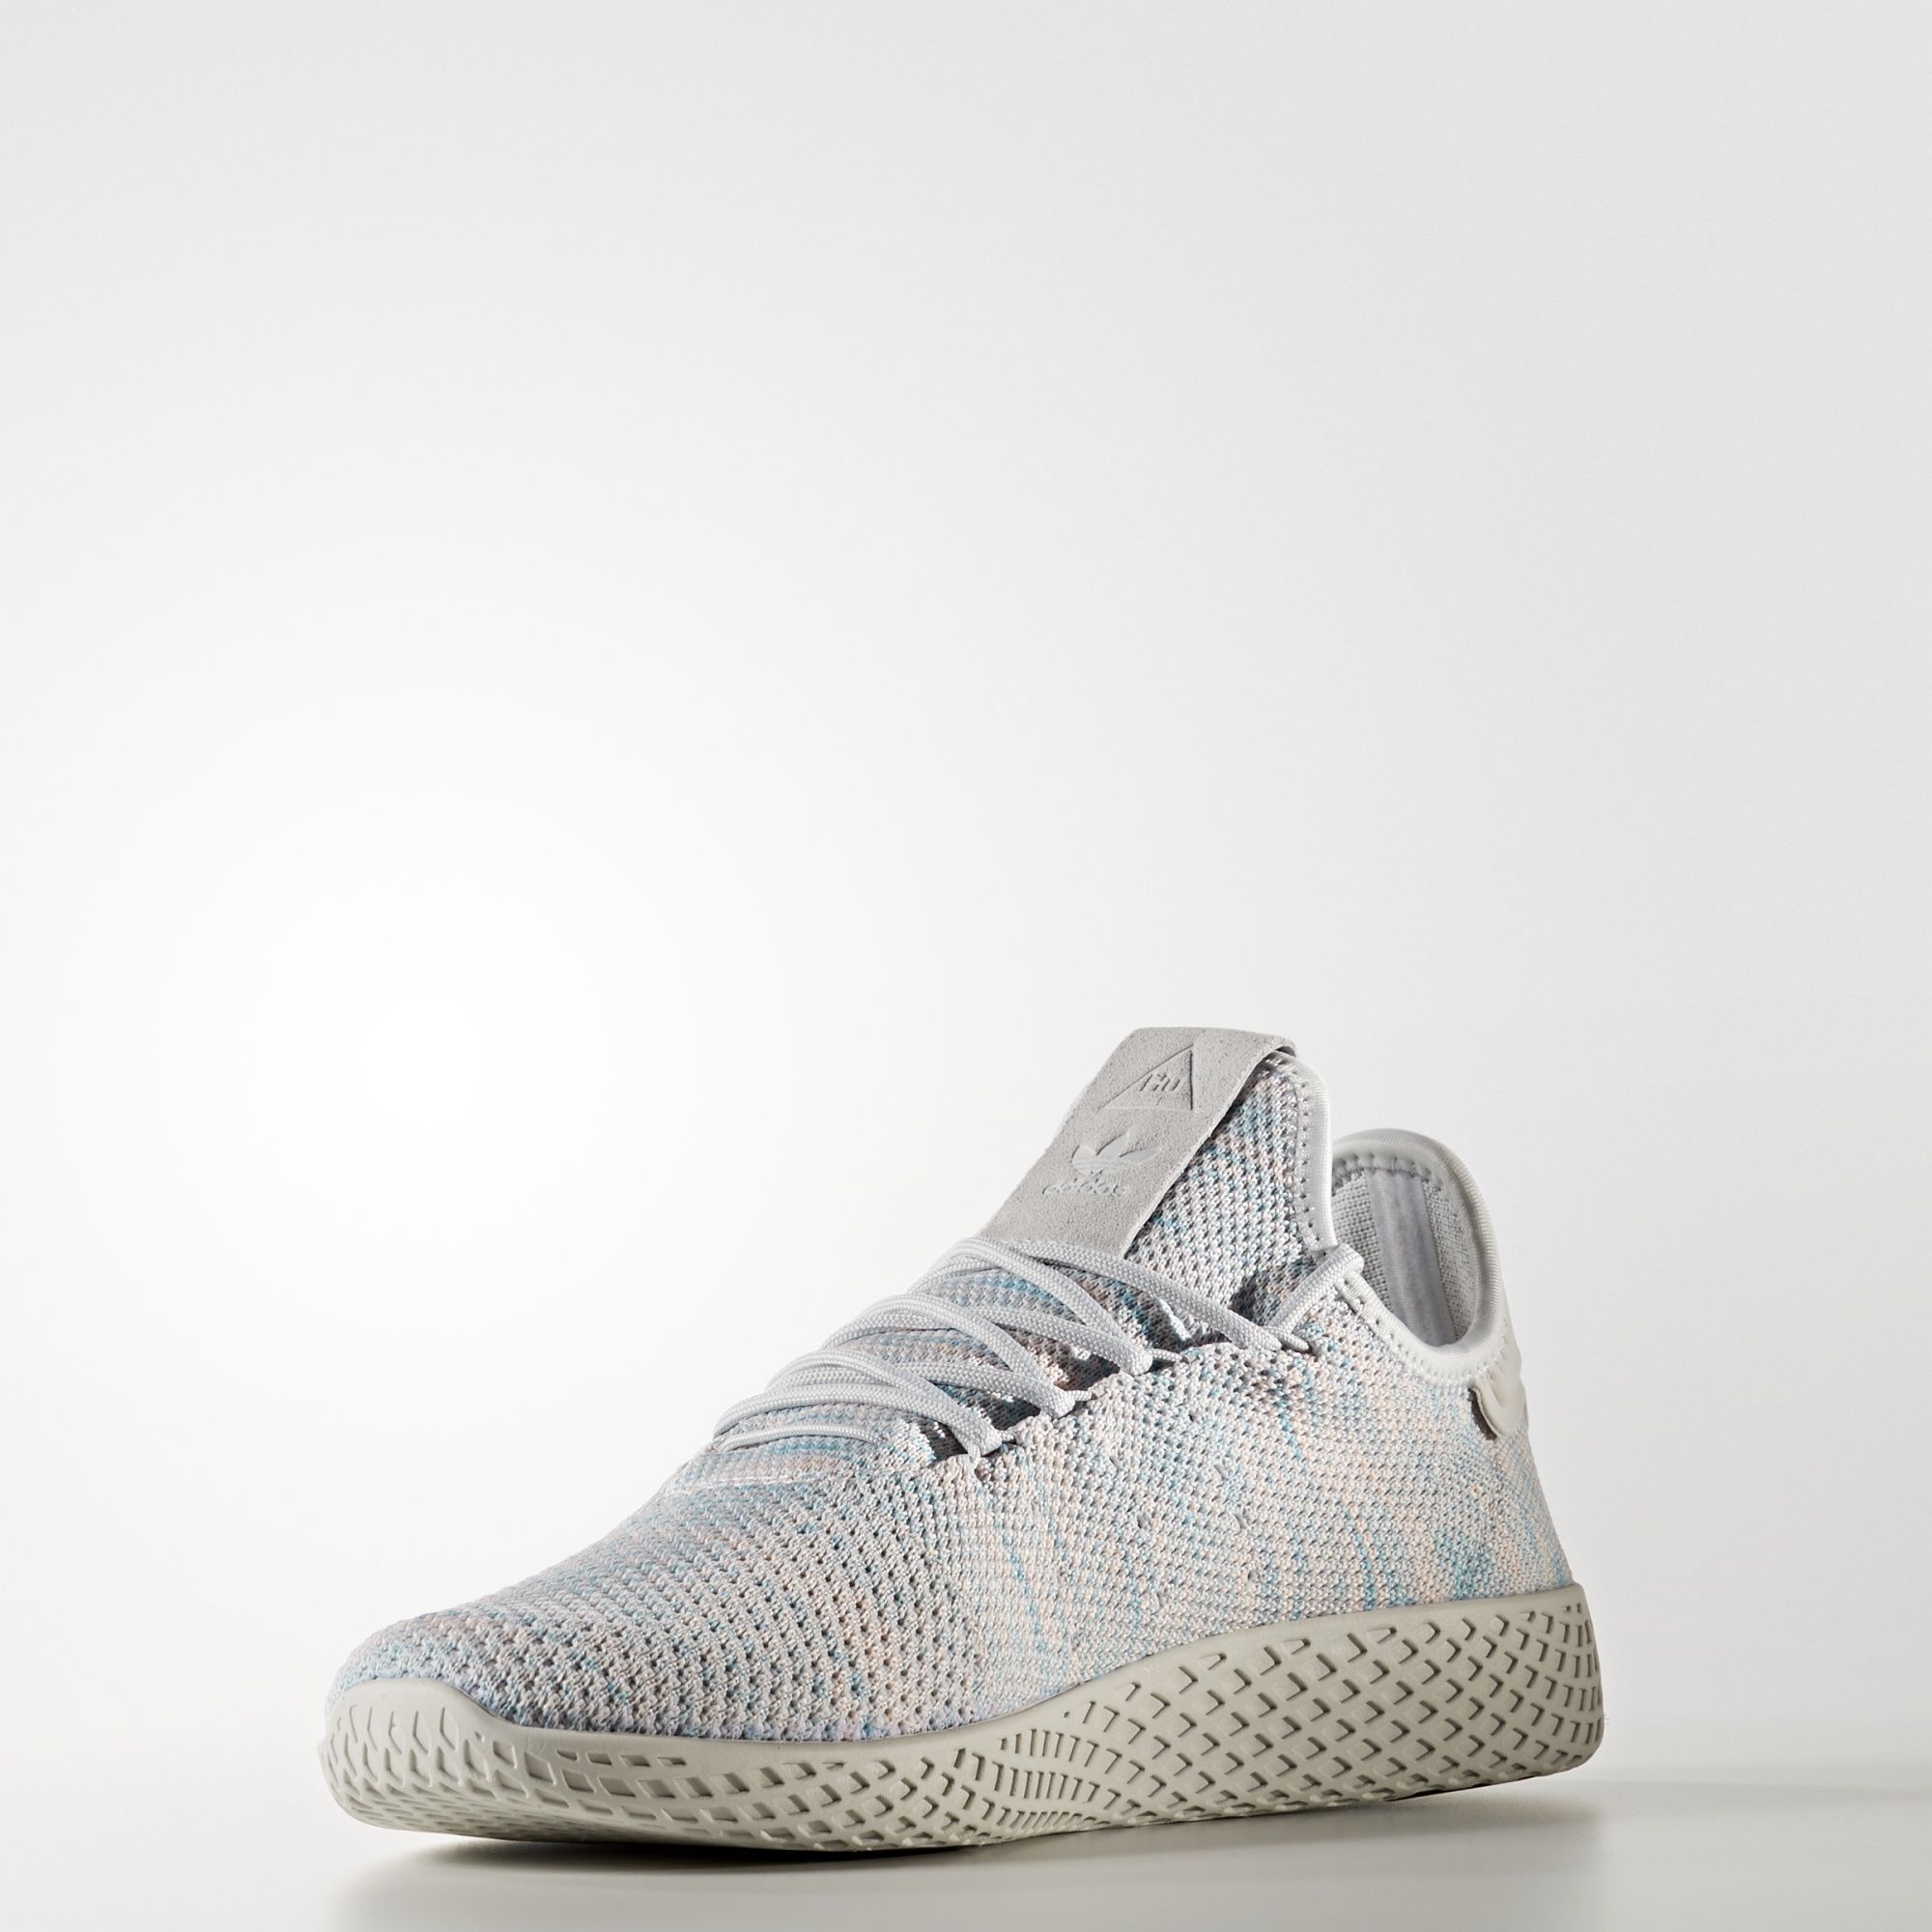 adidas-pharrell-williams-tennis-hu-blue-light-grey-3